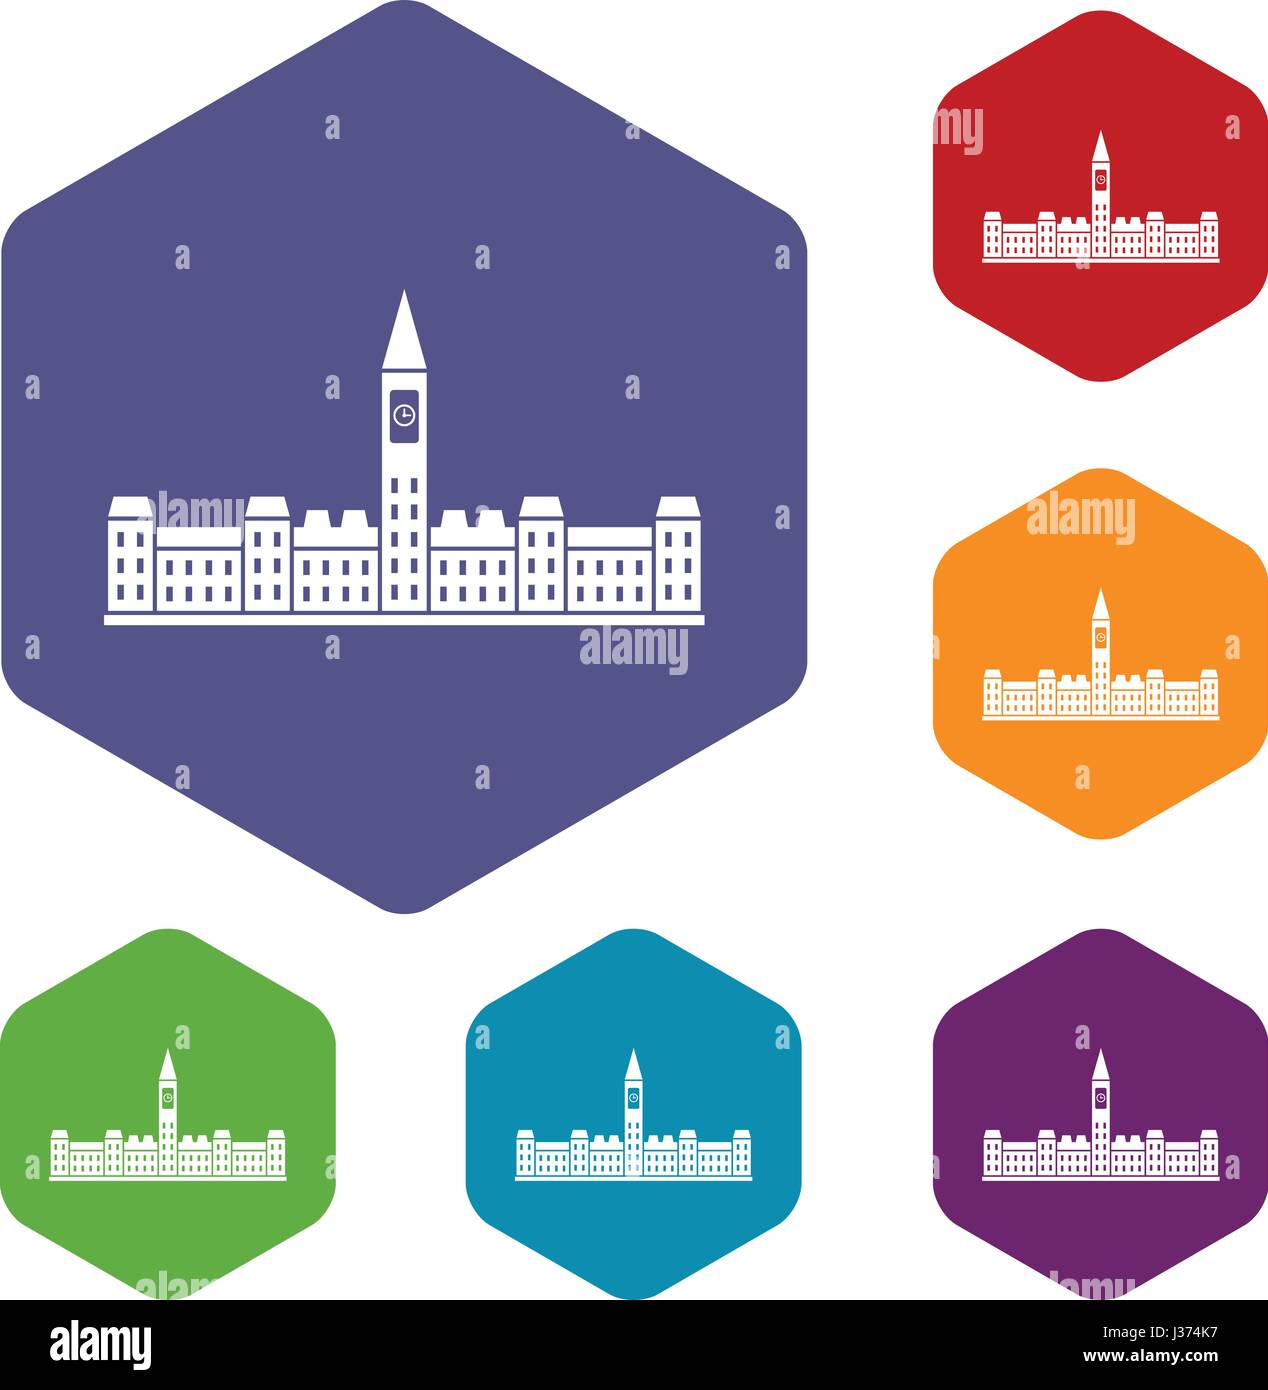 Parliament Building of Canada icons set hexagon Stock Vector